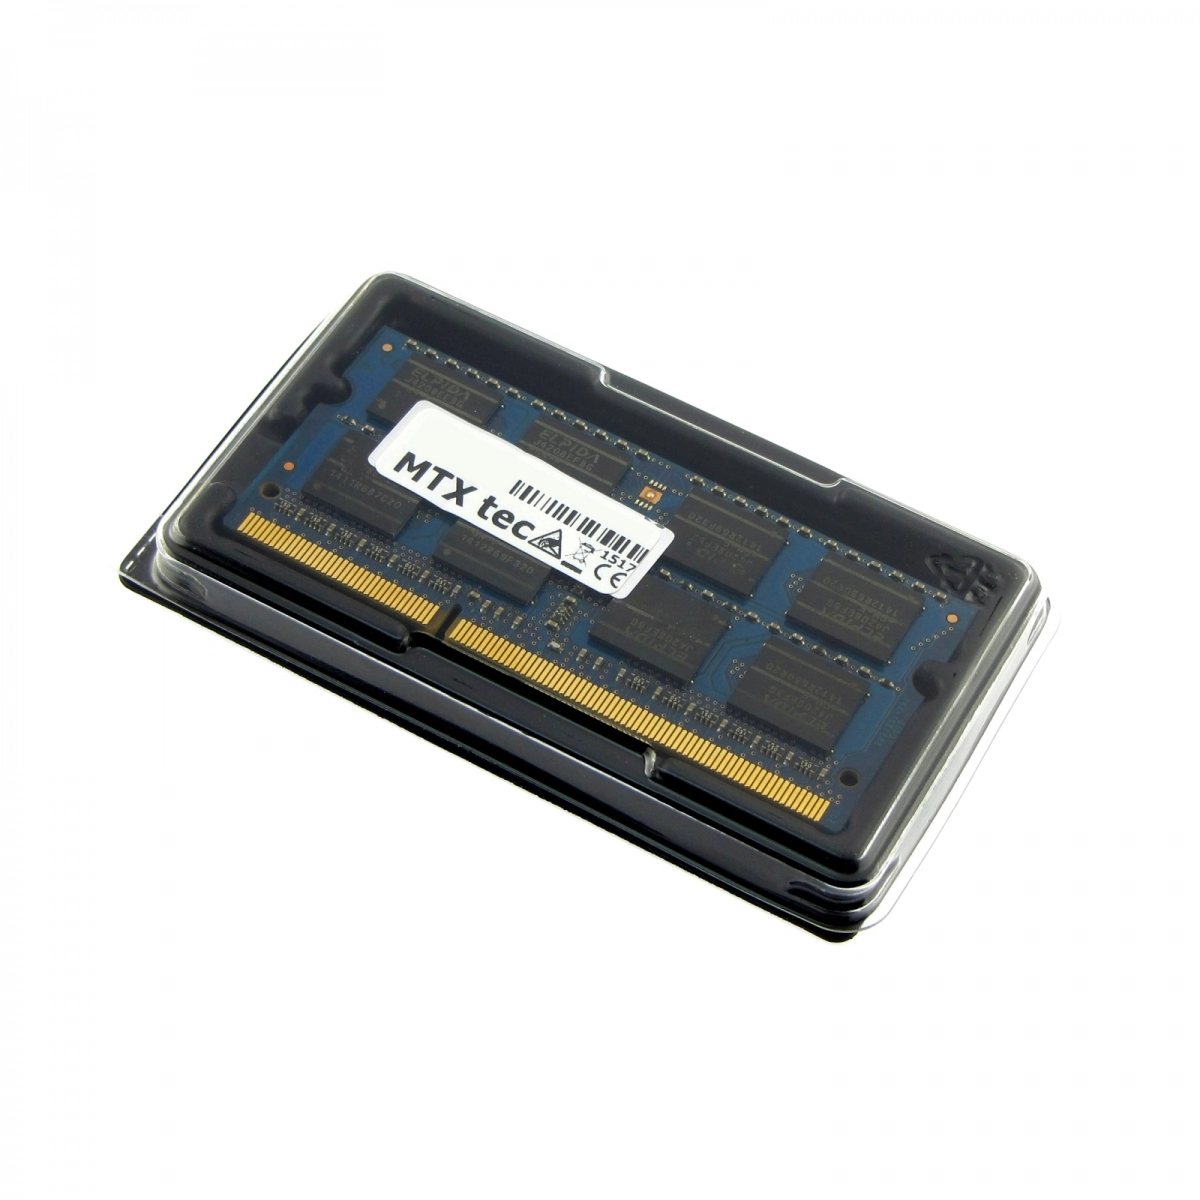 MTXtec Arbeitsspeicher 8 GB RAM für LENOVO ThinkPad T560